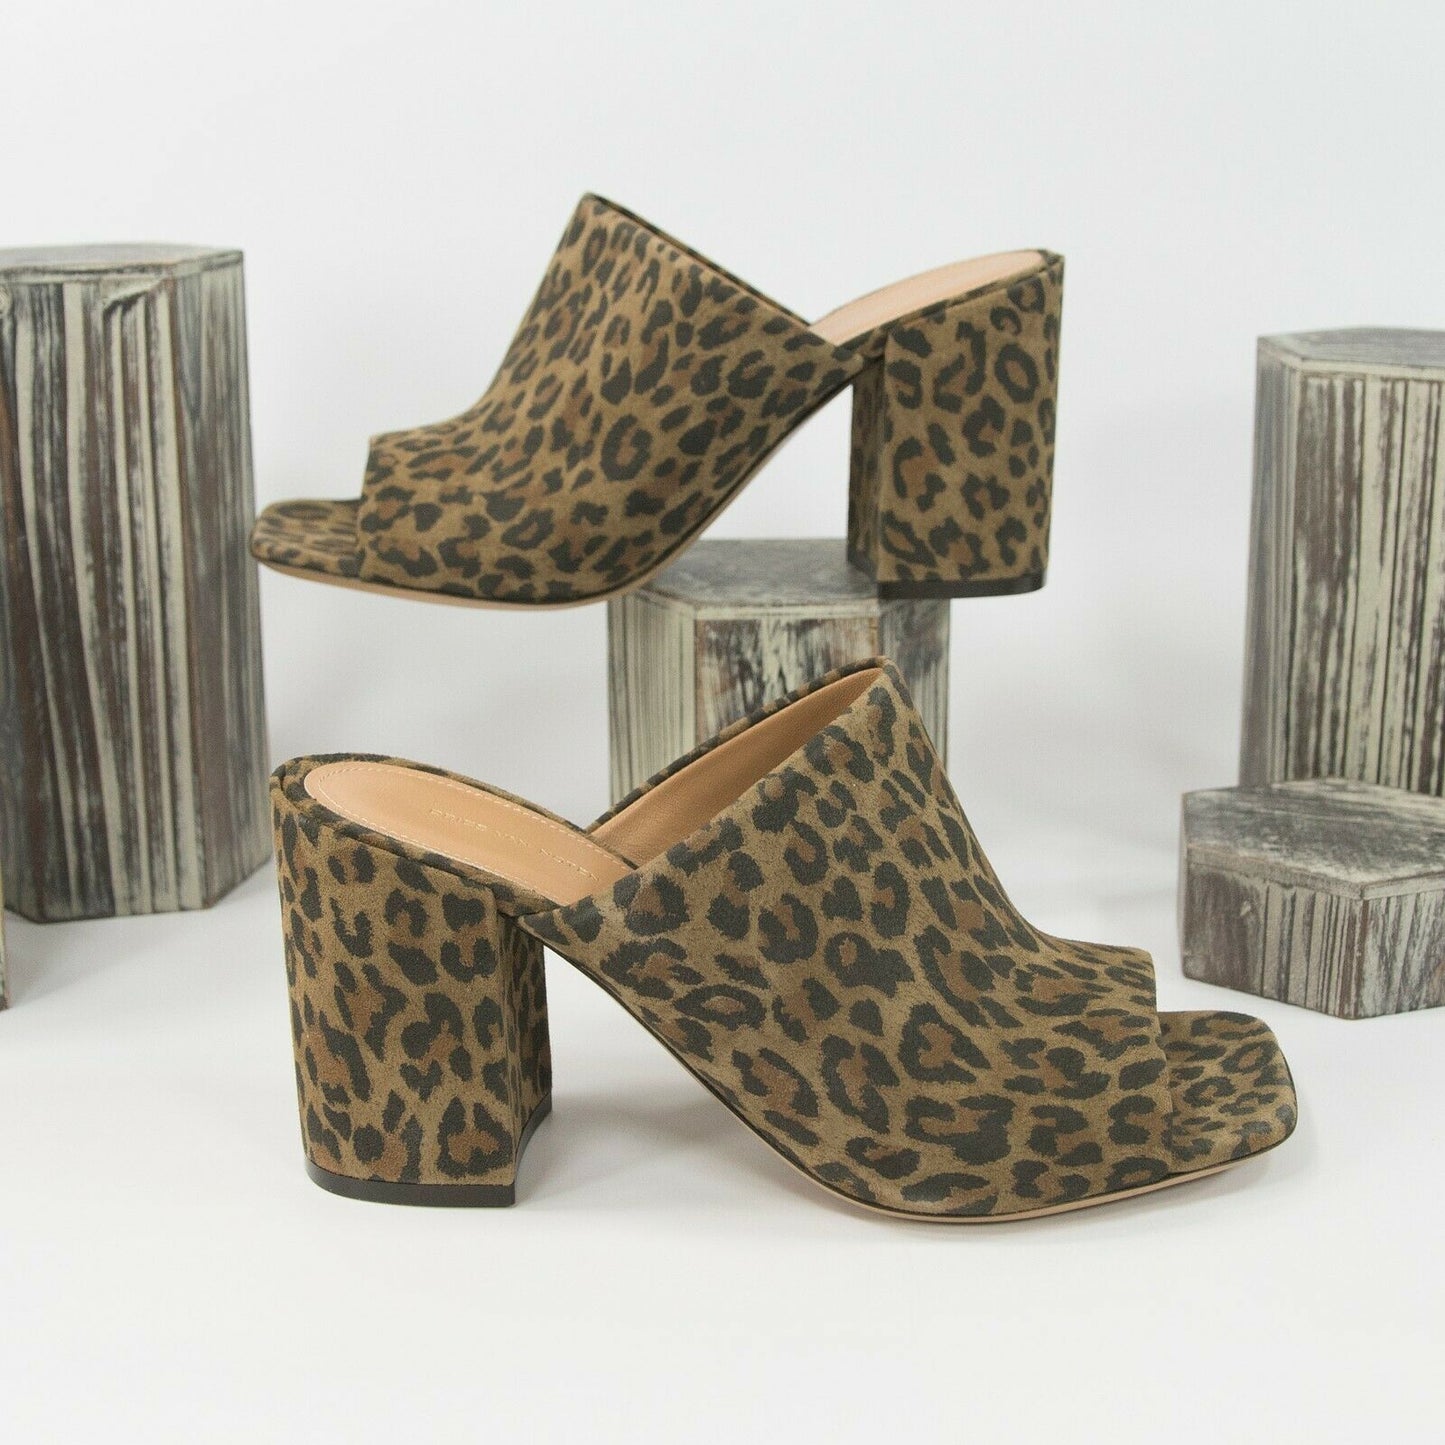 Dries Van Noten Leopard Suede Leather Heels Mules Size 39.5 NIB